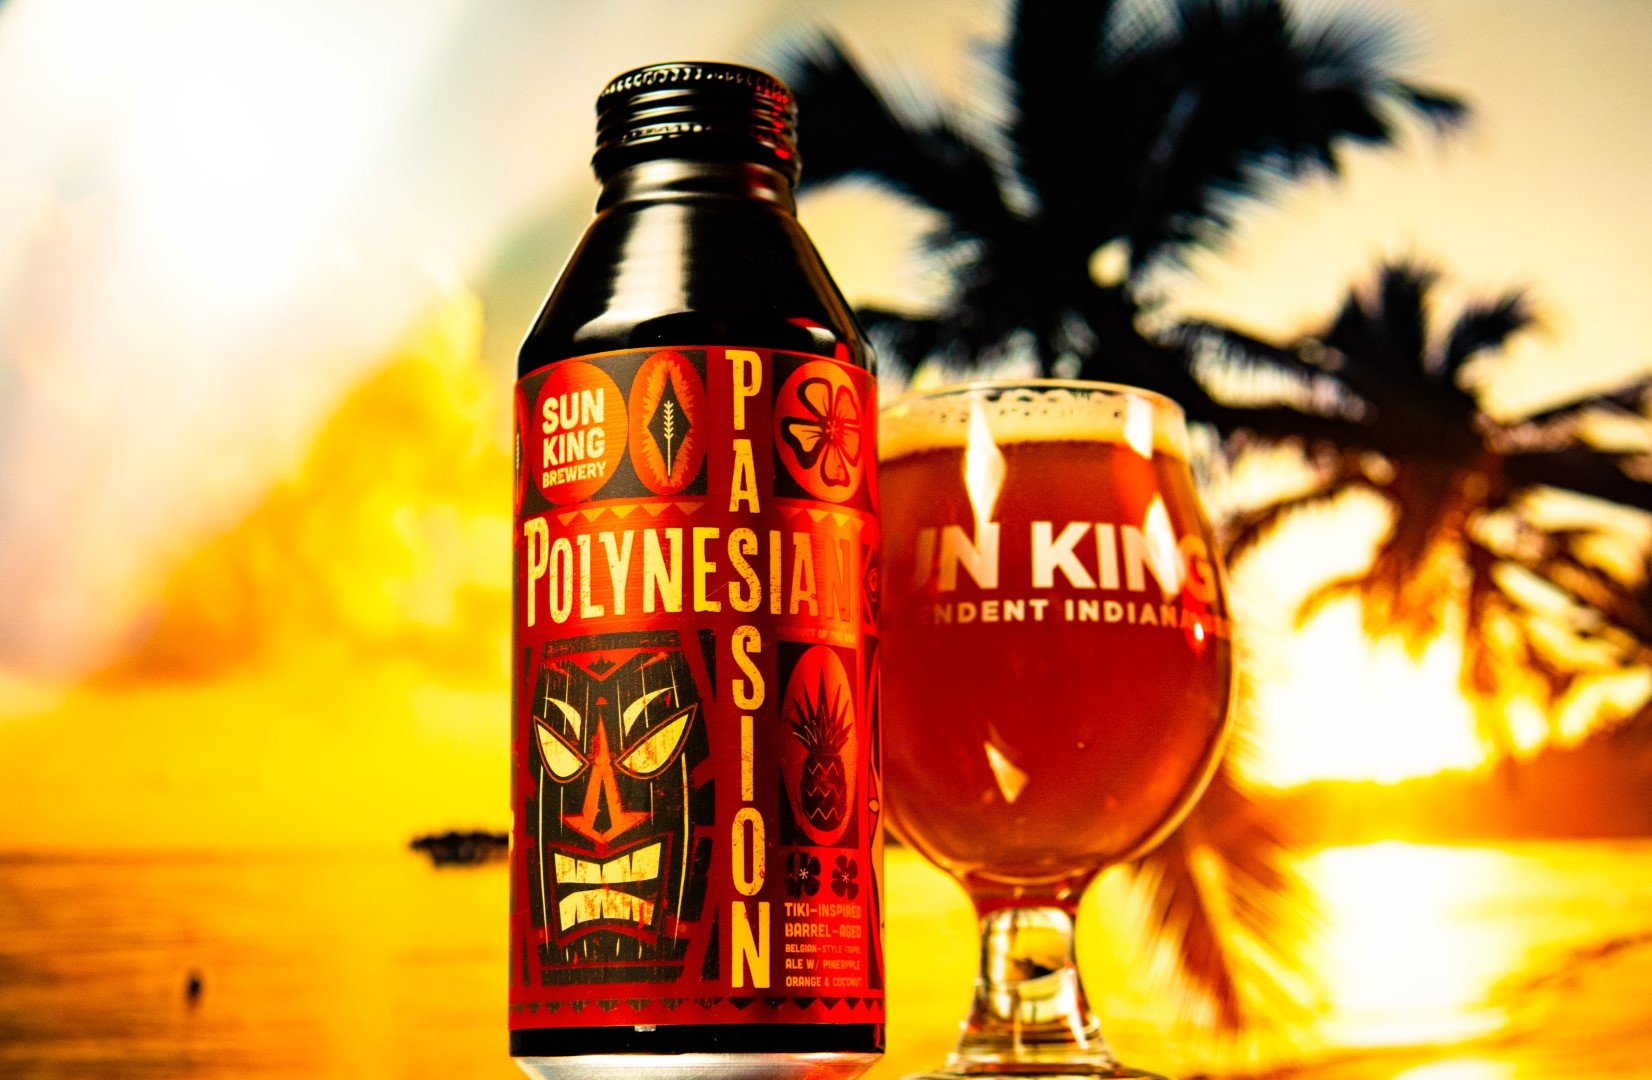 Sun King Brewery Polynesian Passion